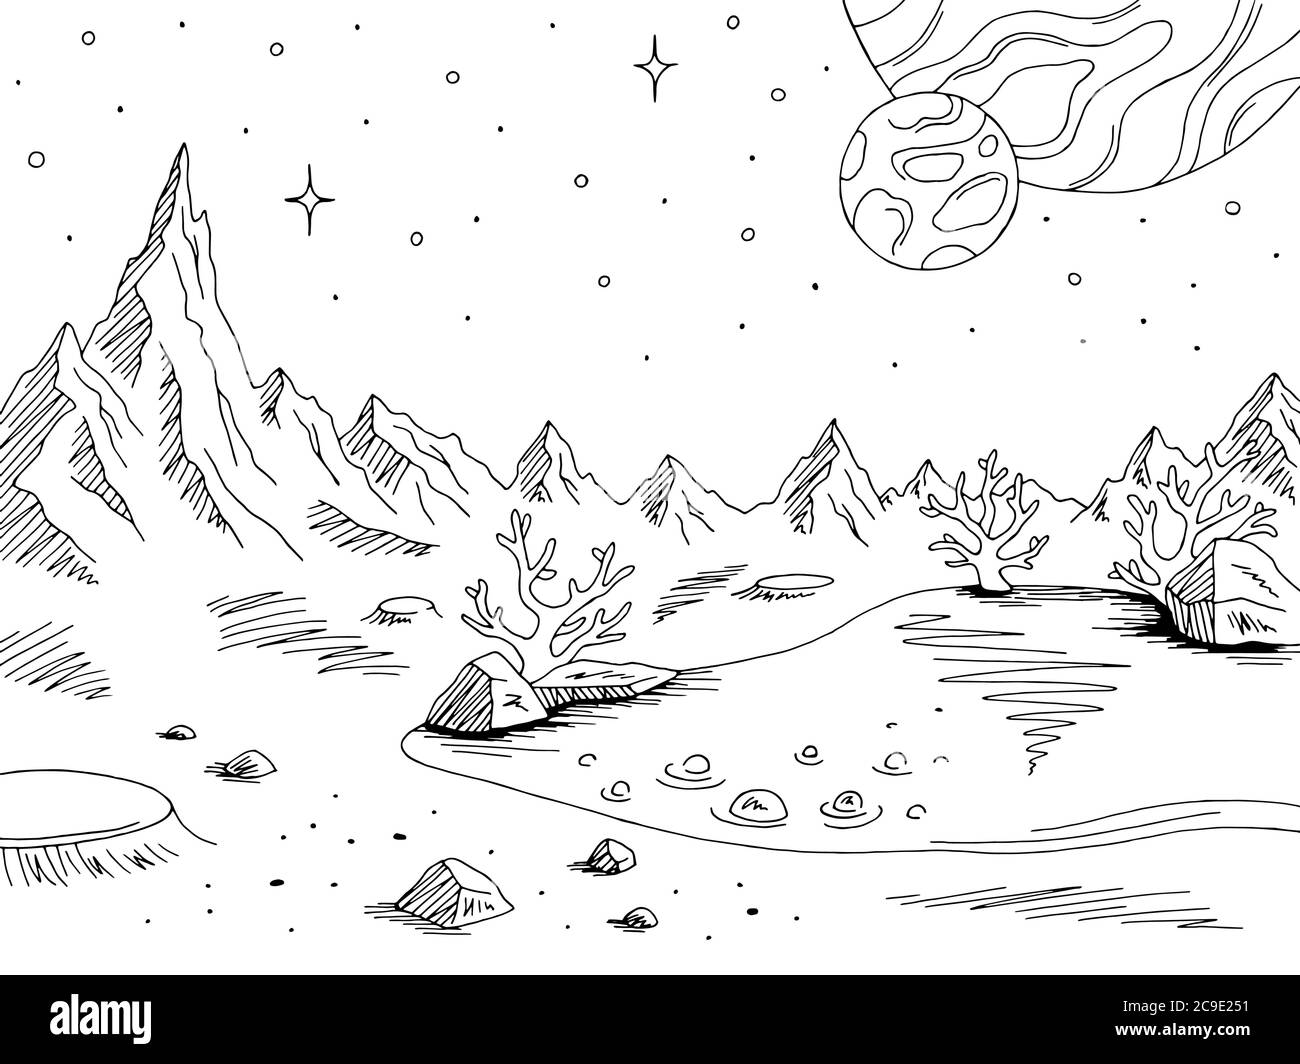 Alien Planet Grafik schwarz weiß Raum Landschaft Skizze Illustration Vektor Stock Vektor